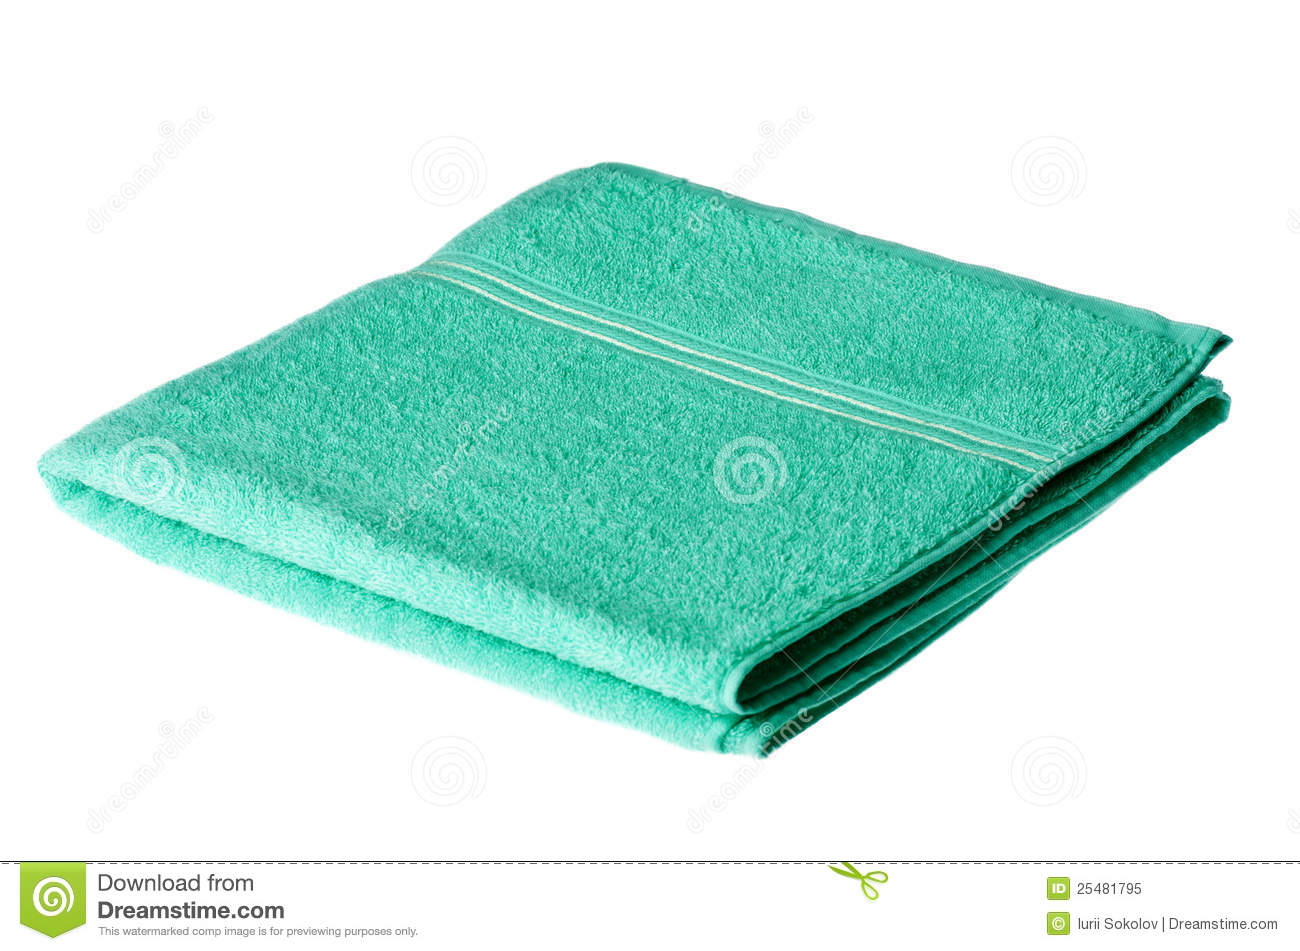 Face towel clipart